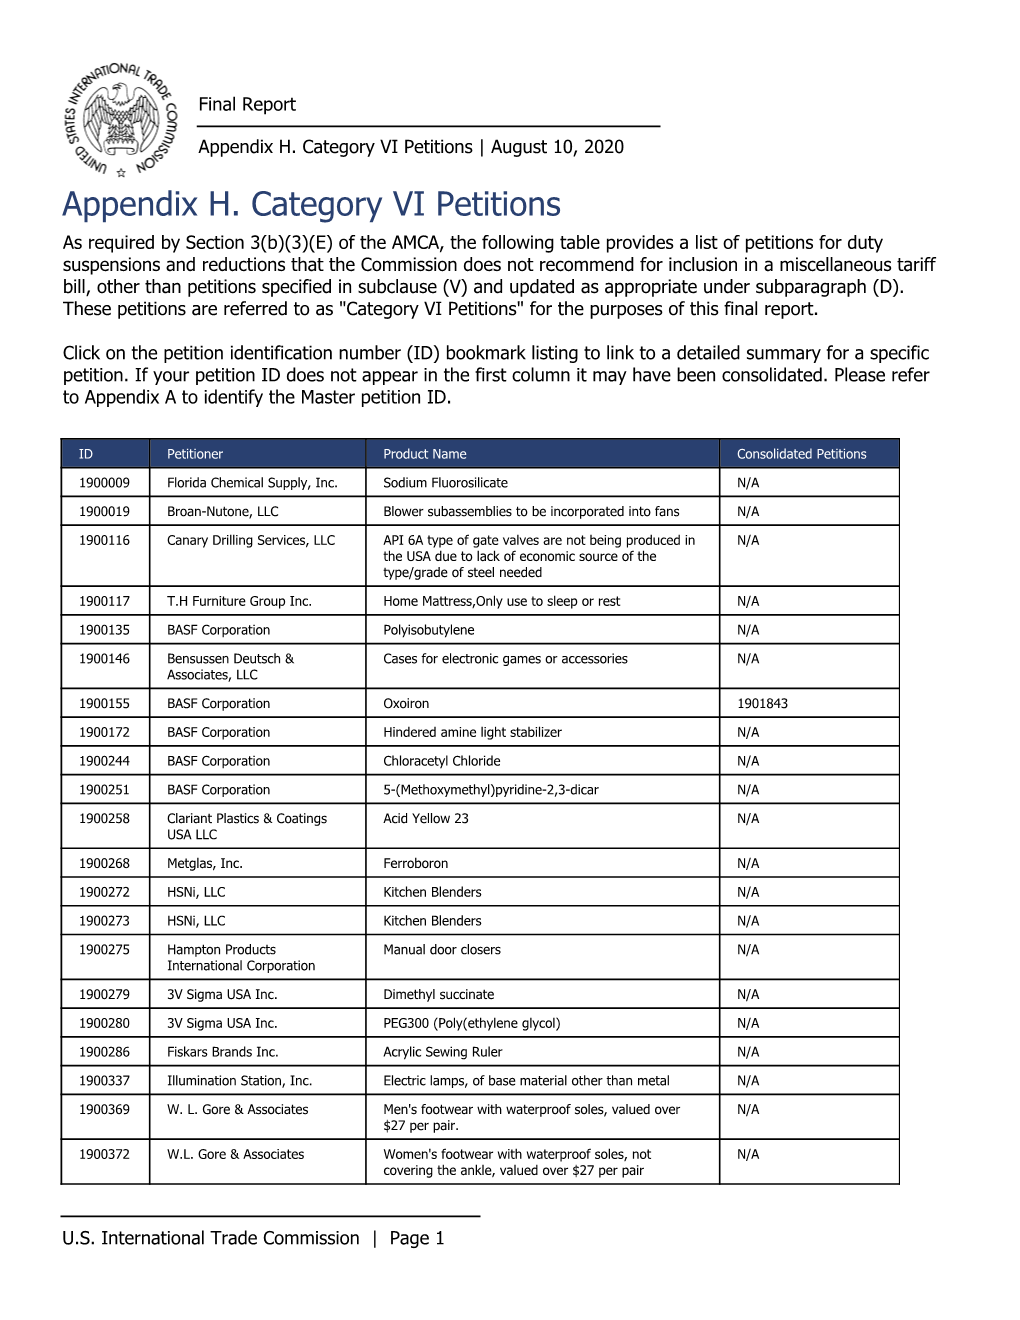 Final Appendix H Category 6 Petitions